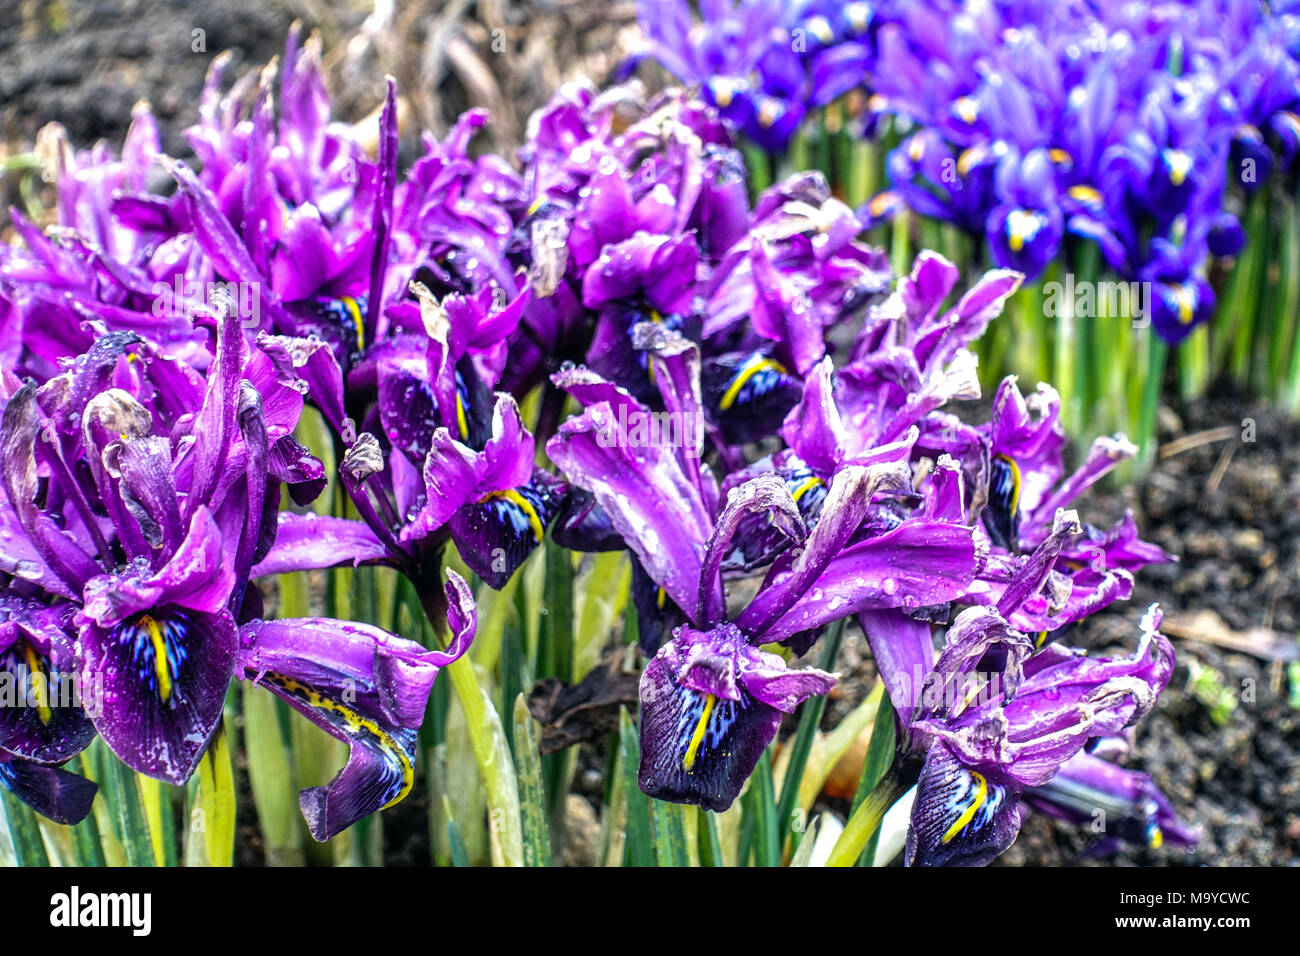 Early spring garden Purple irises, Iris reticulata George and Harmony spring irises beds Stock Photo